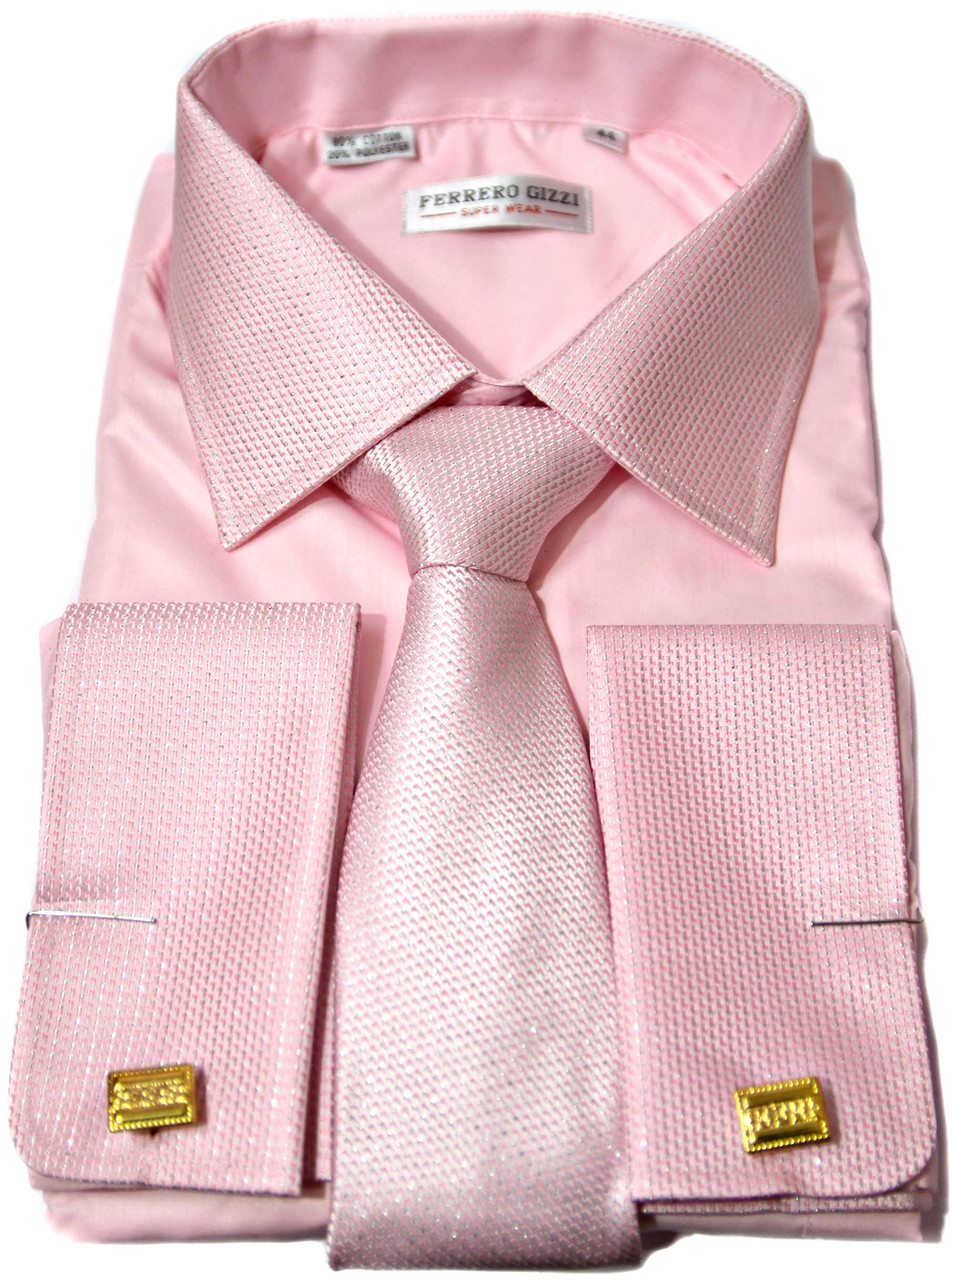 Сорочка чоловіча."Ferrero Gizzi" + краватка. Рожева. Довгий рукав